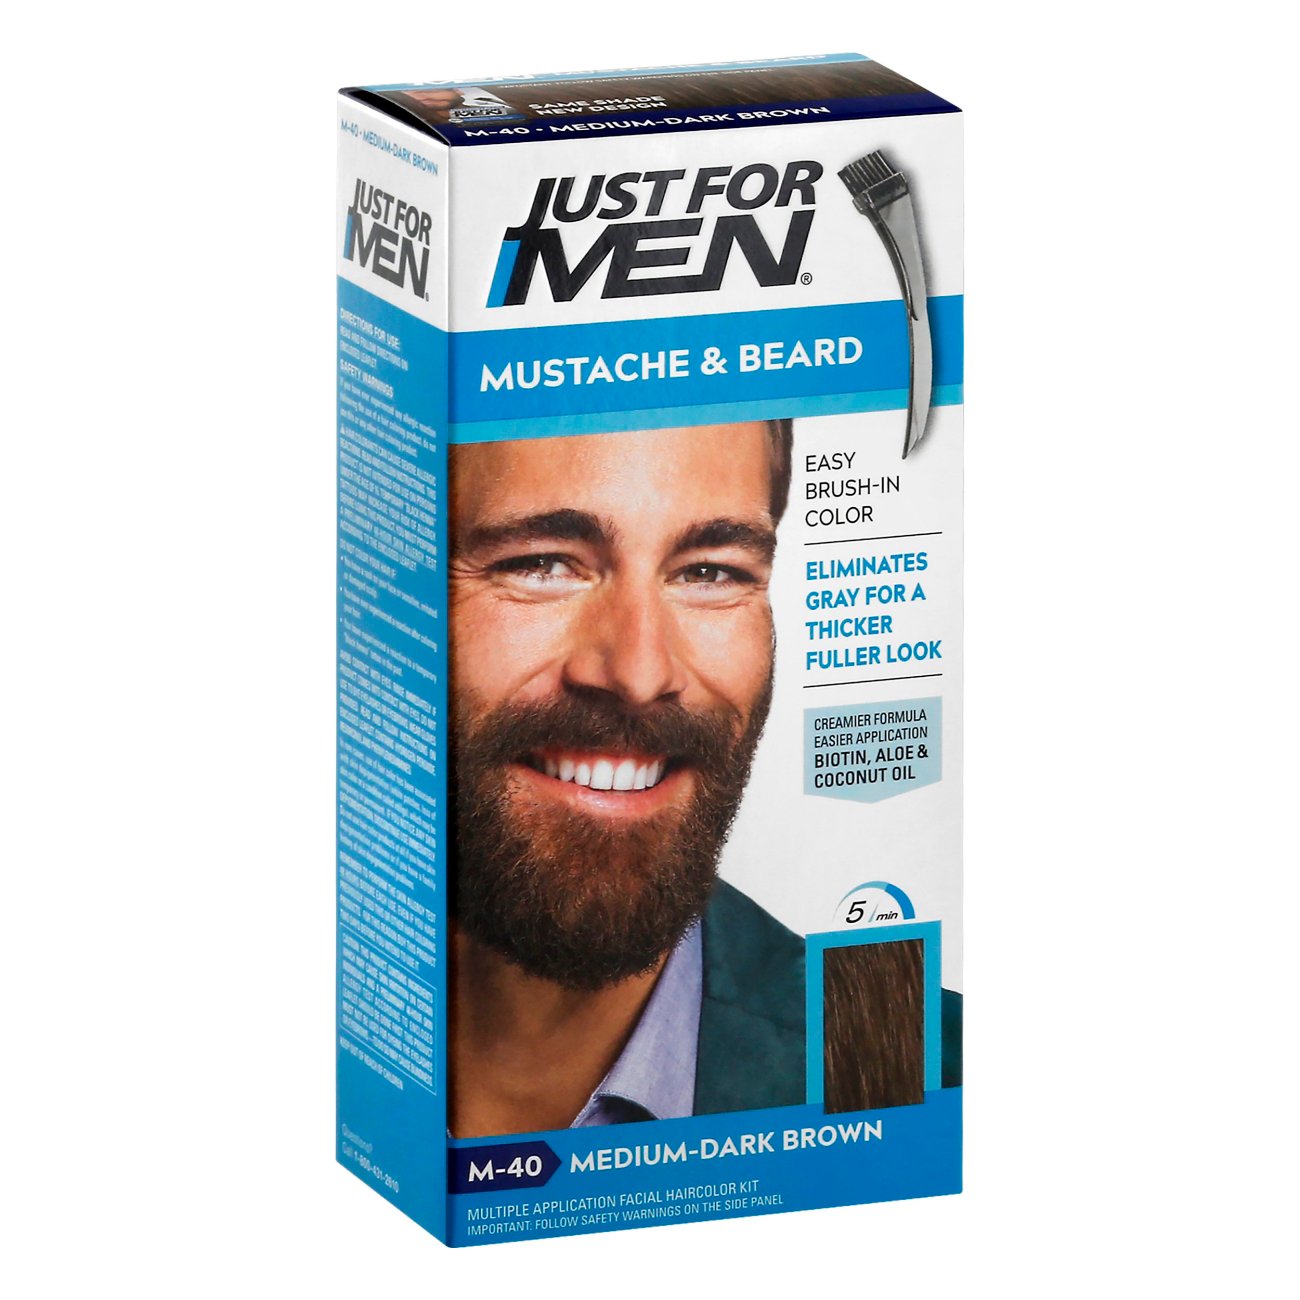 Just For Men Mustache & Beard Medium-Dark Brown M-40 Brush-In Color Gel